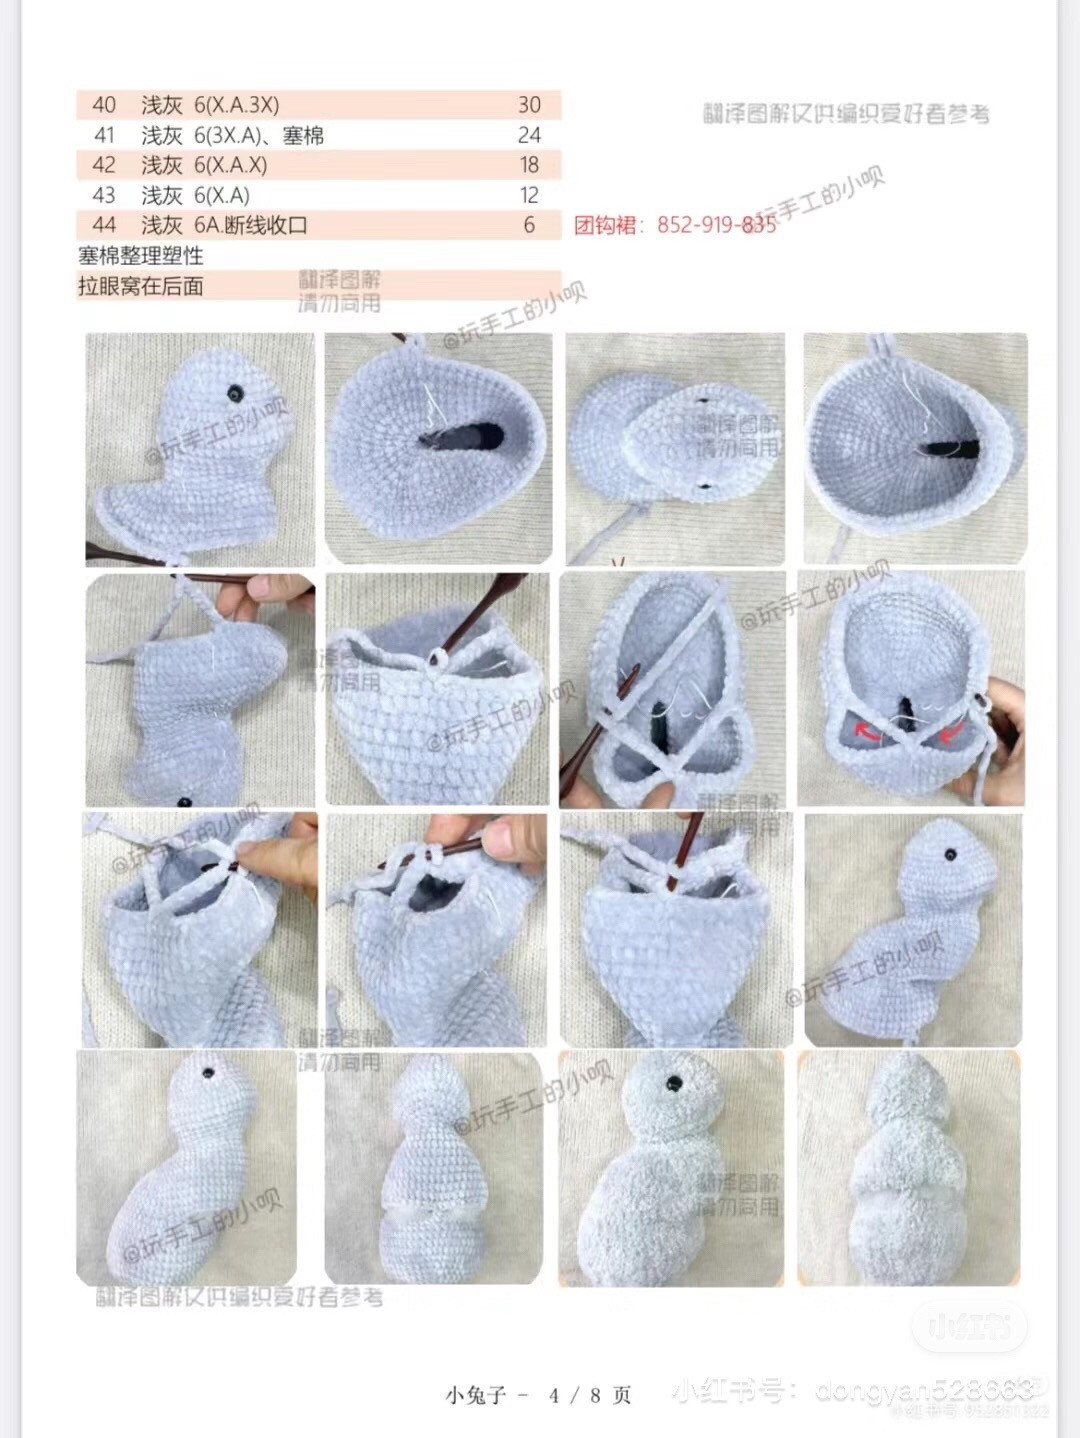 White rabbit crochet pattern, brown rabbit